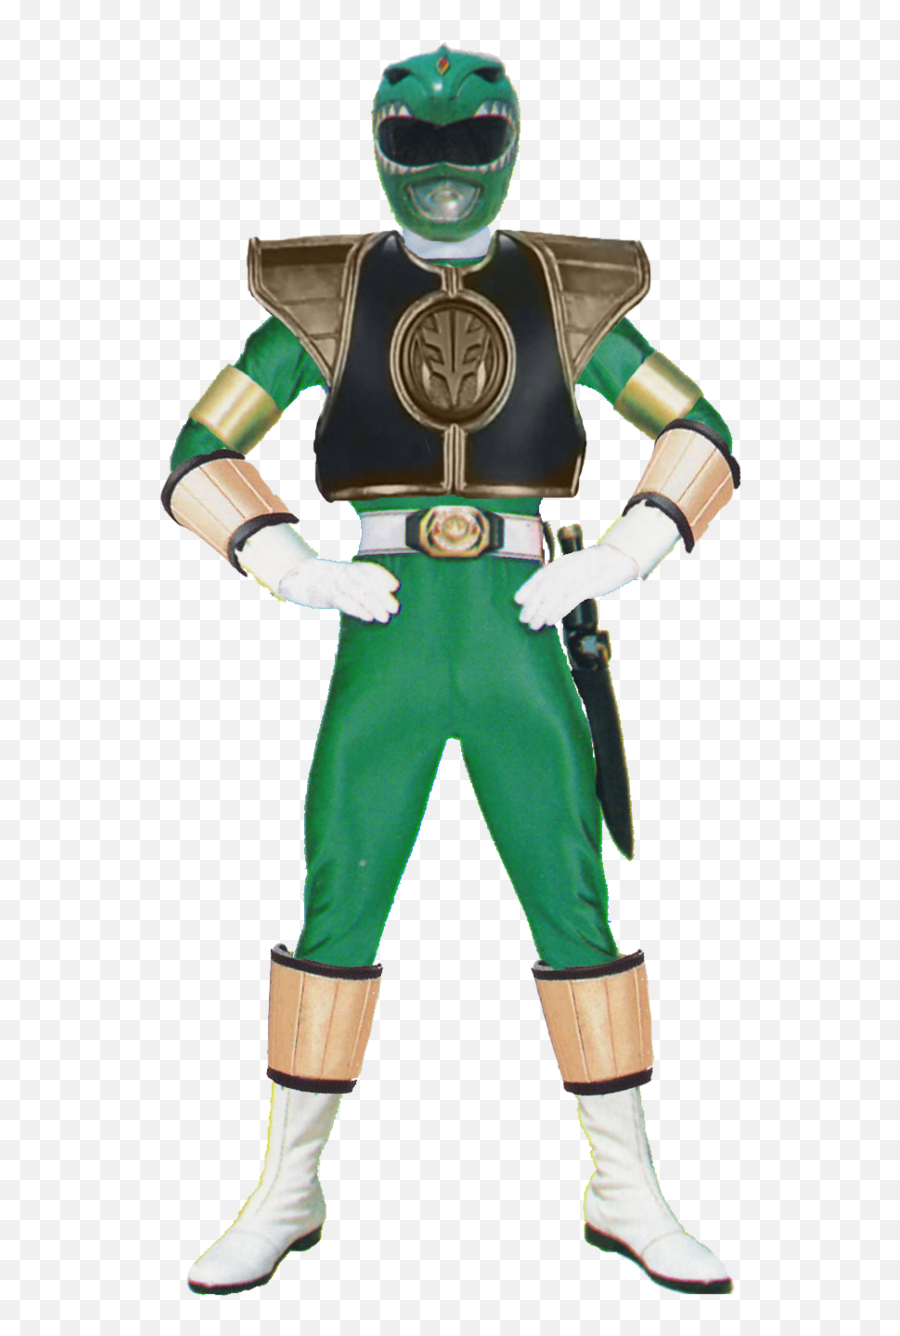 Green Ranger Png 6 Image - White Ranger With Green Ranger Shield,Green Ranger Png